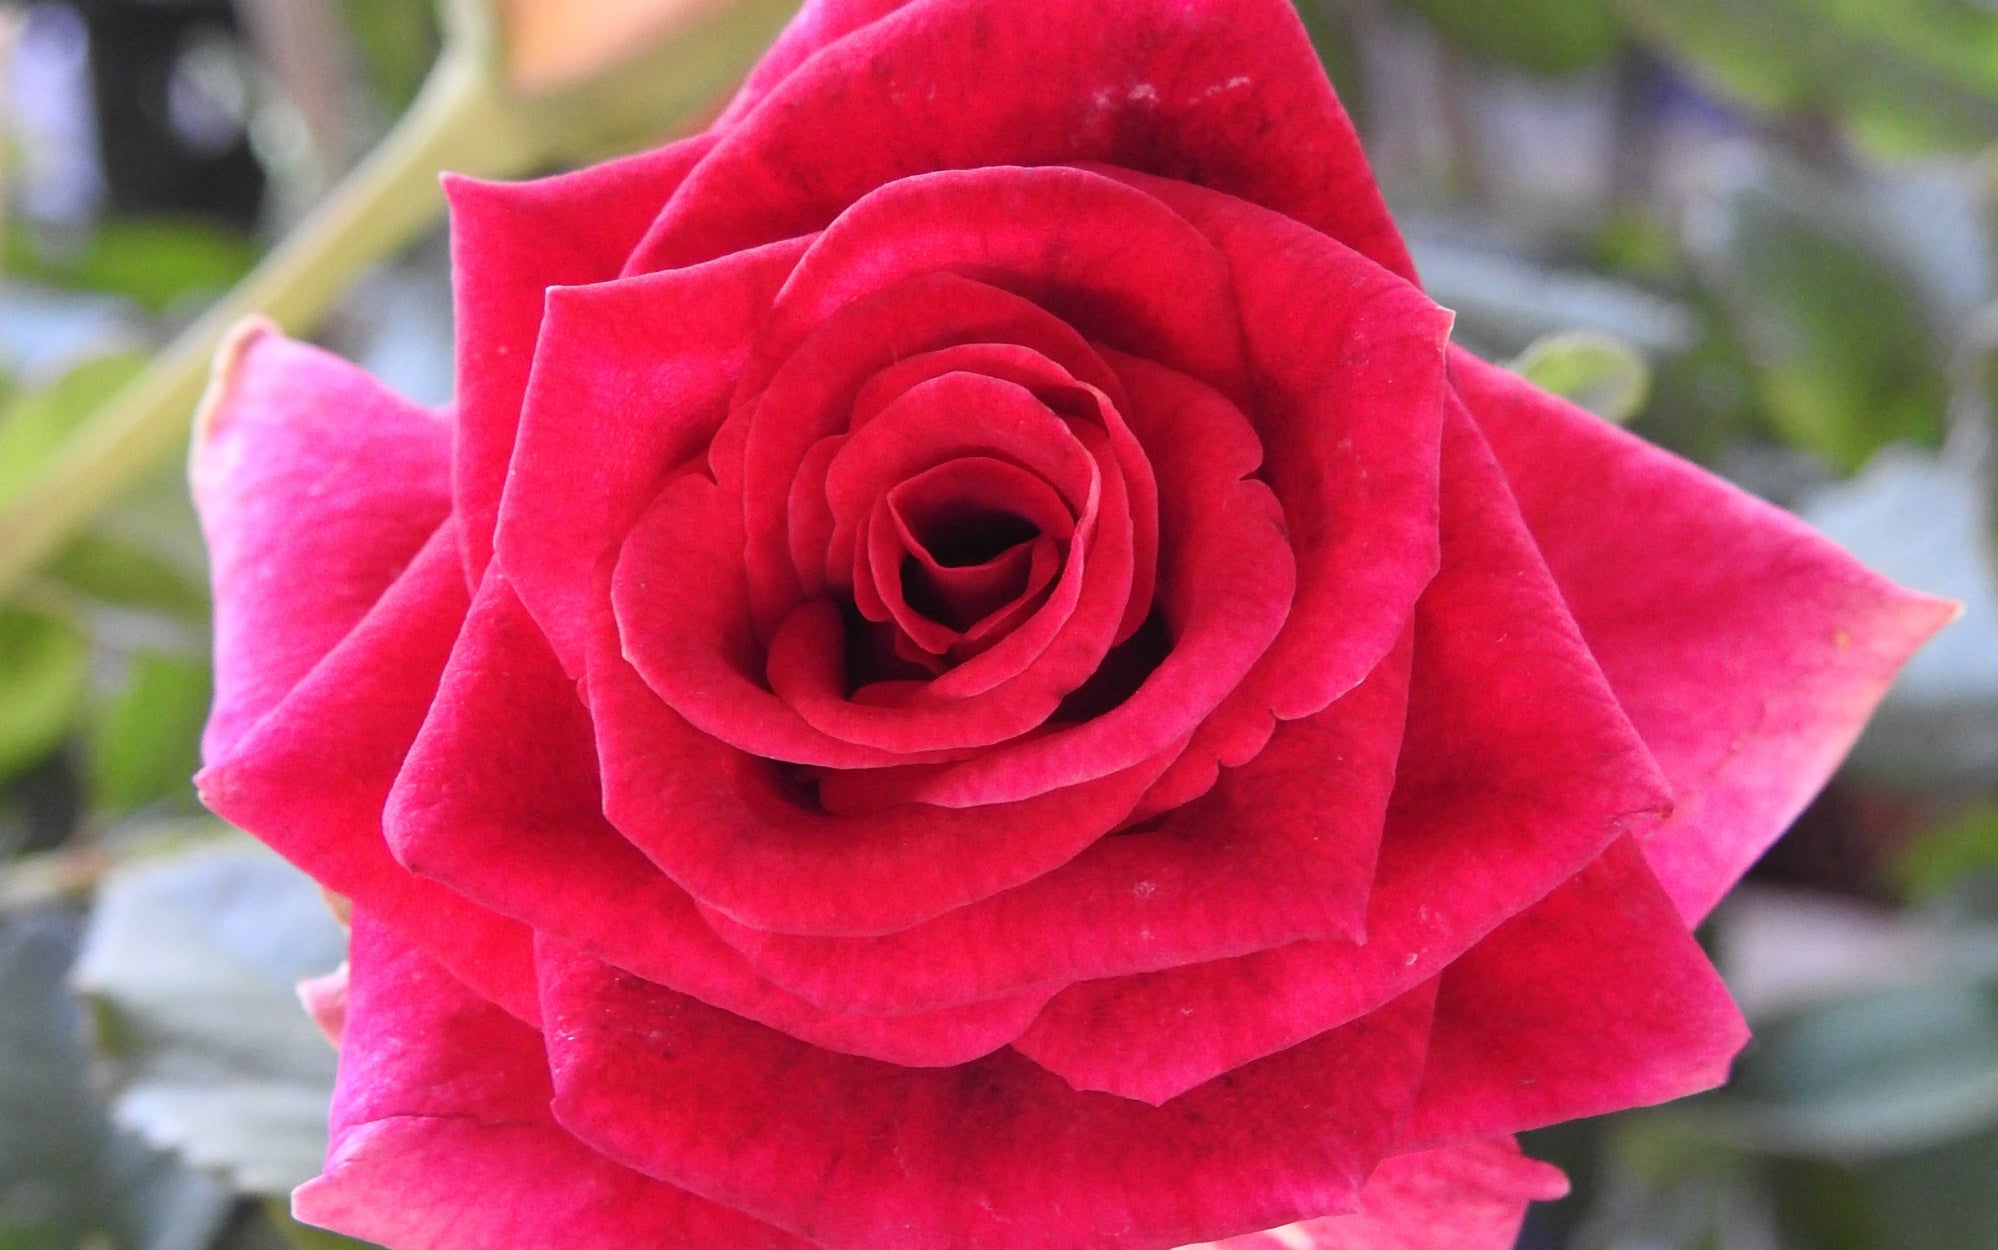 Close-up photograph of a pink rose